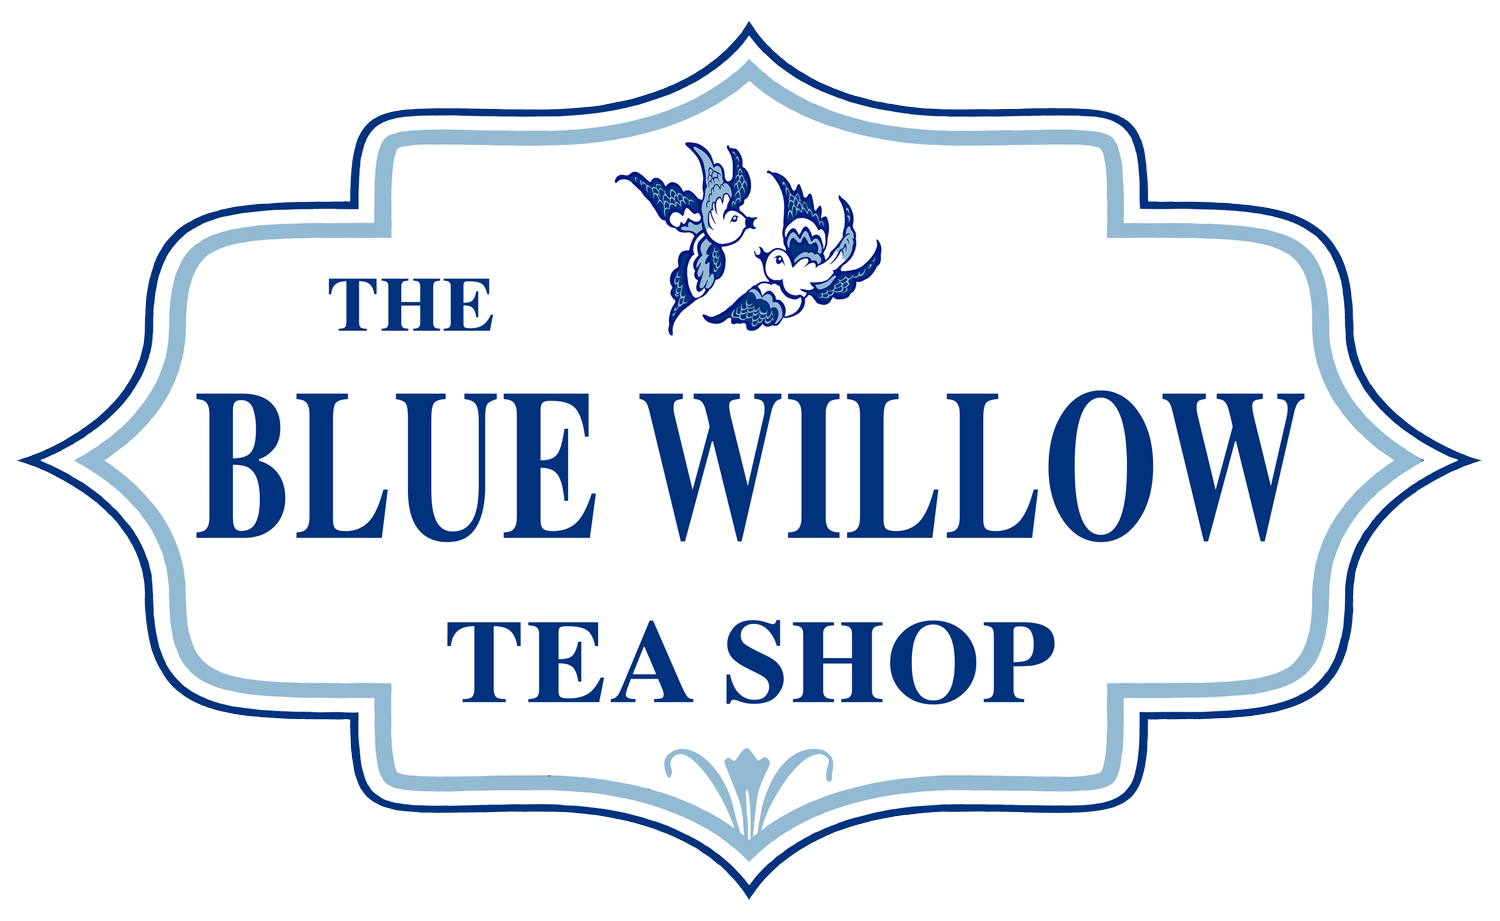 The Blue Willow Tea Shop